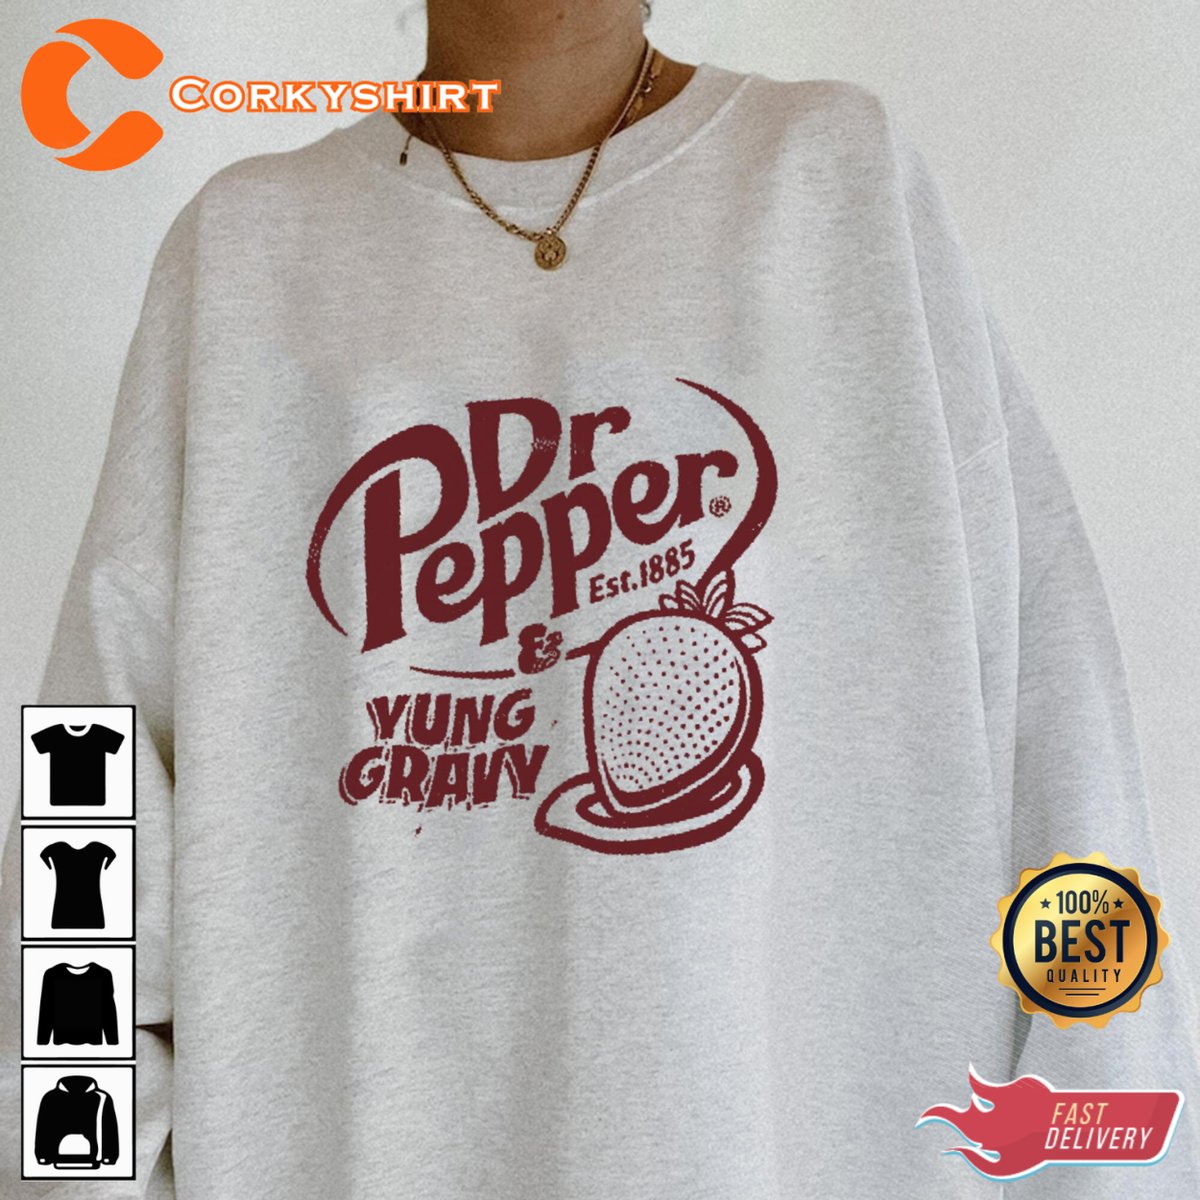 Dr Pepper Strawberry And Cream Shirt
corkyshirt.com/dr-pepper-shir…
#Tuesday #Tuesdayvibe #TuesdayFun #TuesdayMotivaton #TuesdayFeeling #Corkyshirt